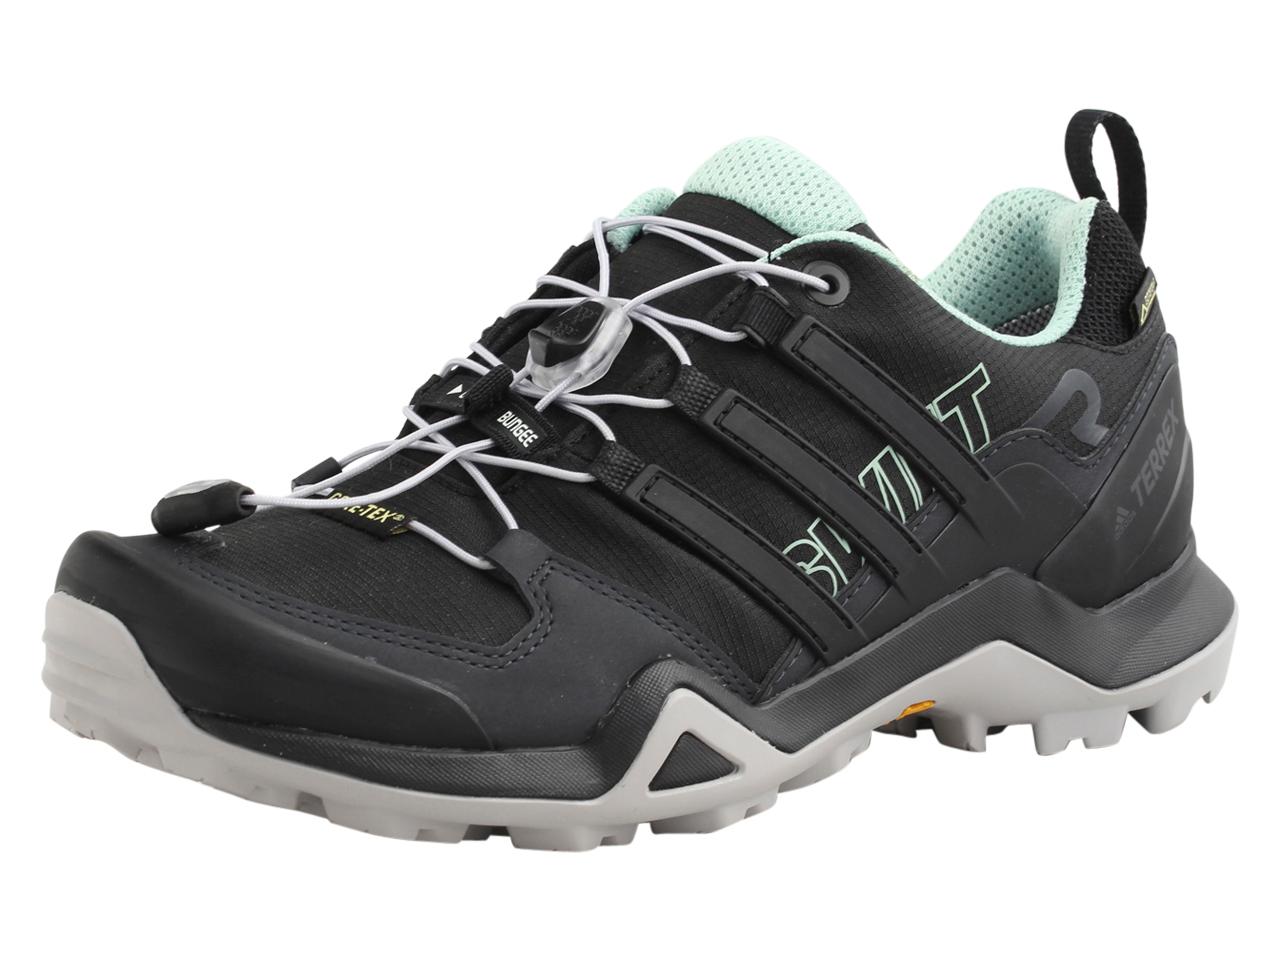 Adidas Women's Terrex Swift R2 GTX W Hiking Sneakers Shoes - Black - 7 B(M) US